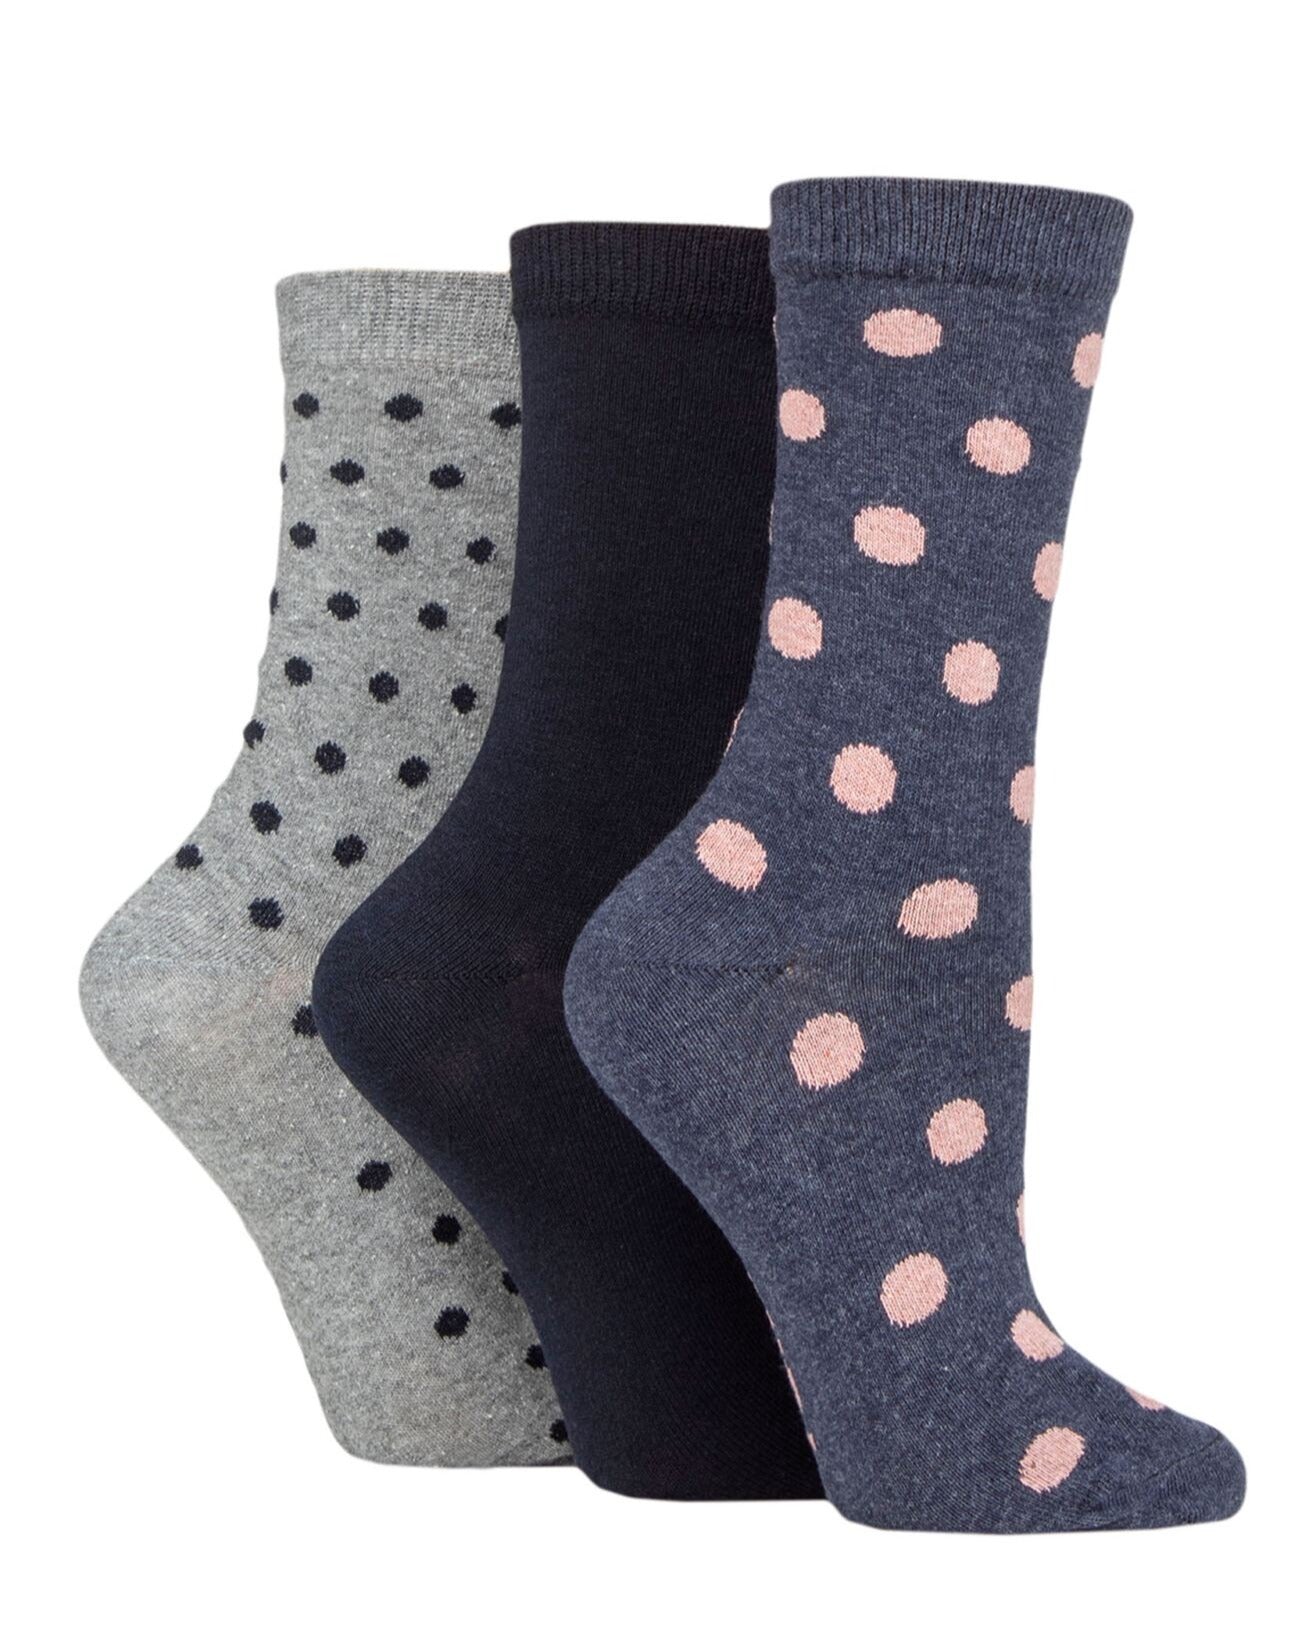 TORE 3Pk 100% Recycled Jacquard Bold Spot Socks - Women's